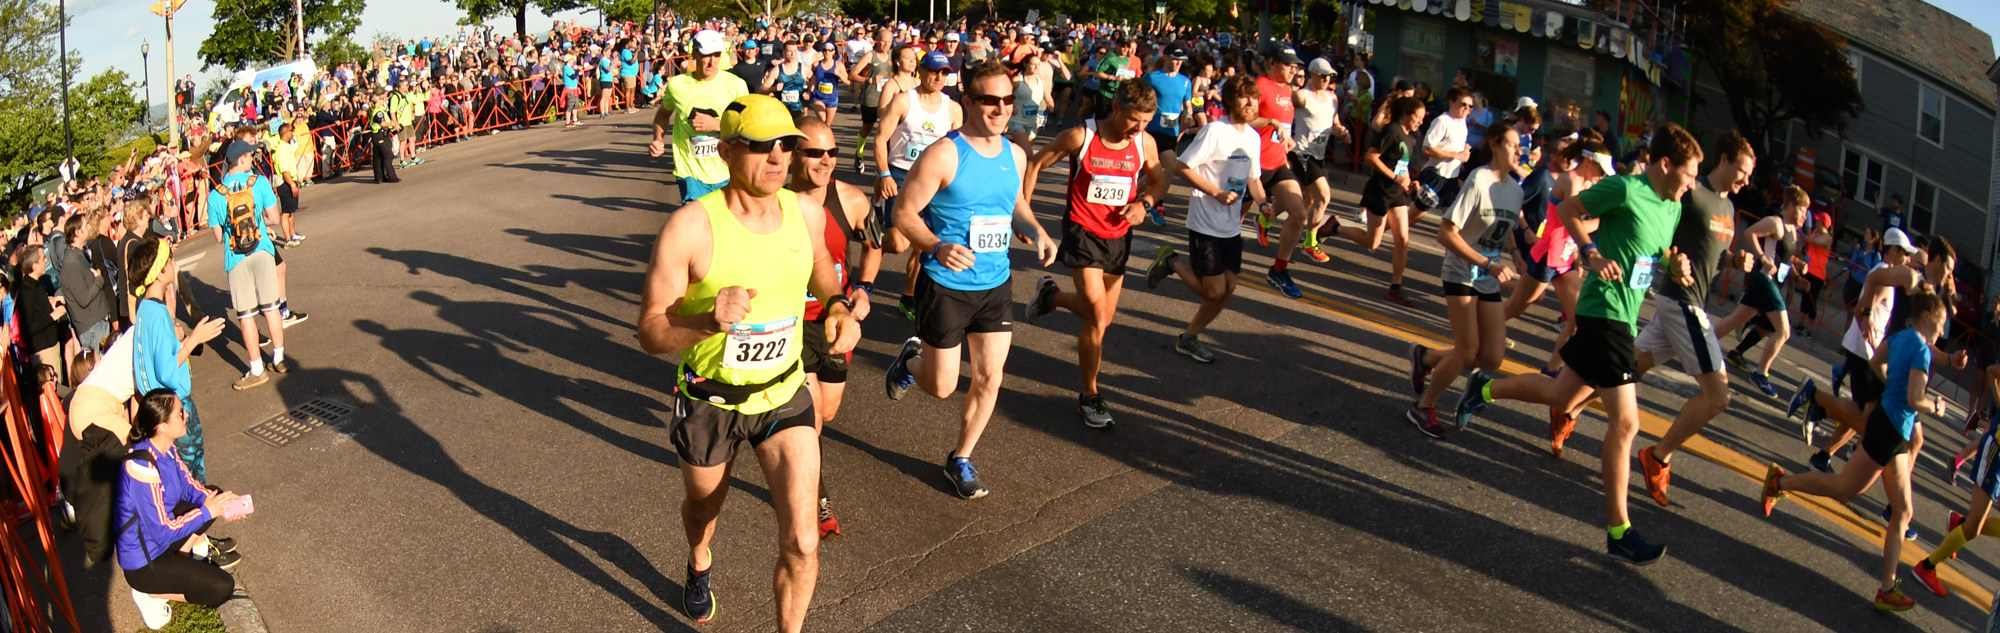 Marathon Runners turning a corner